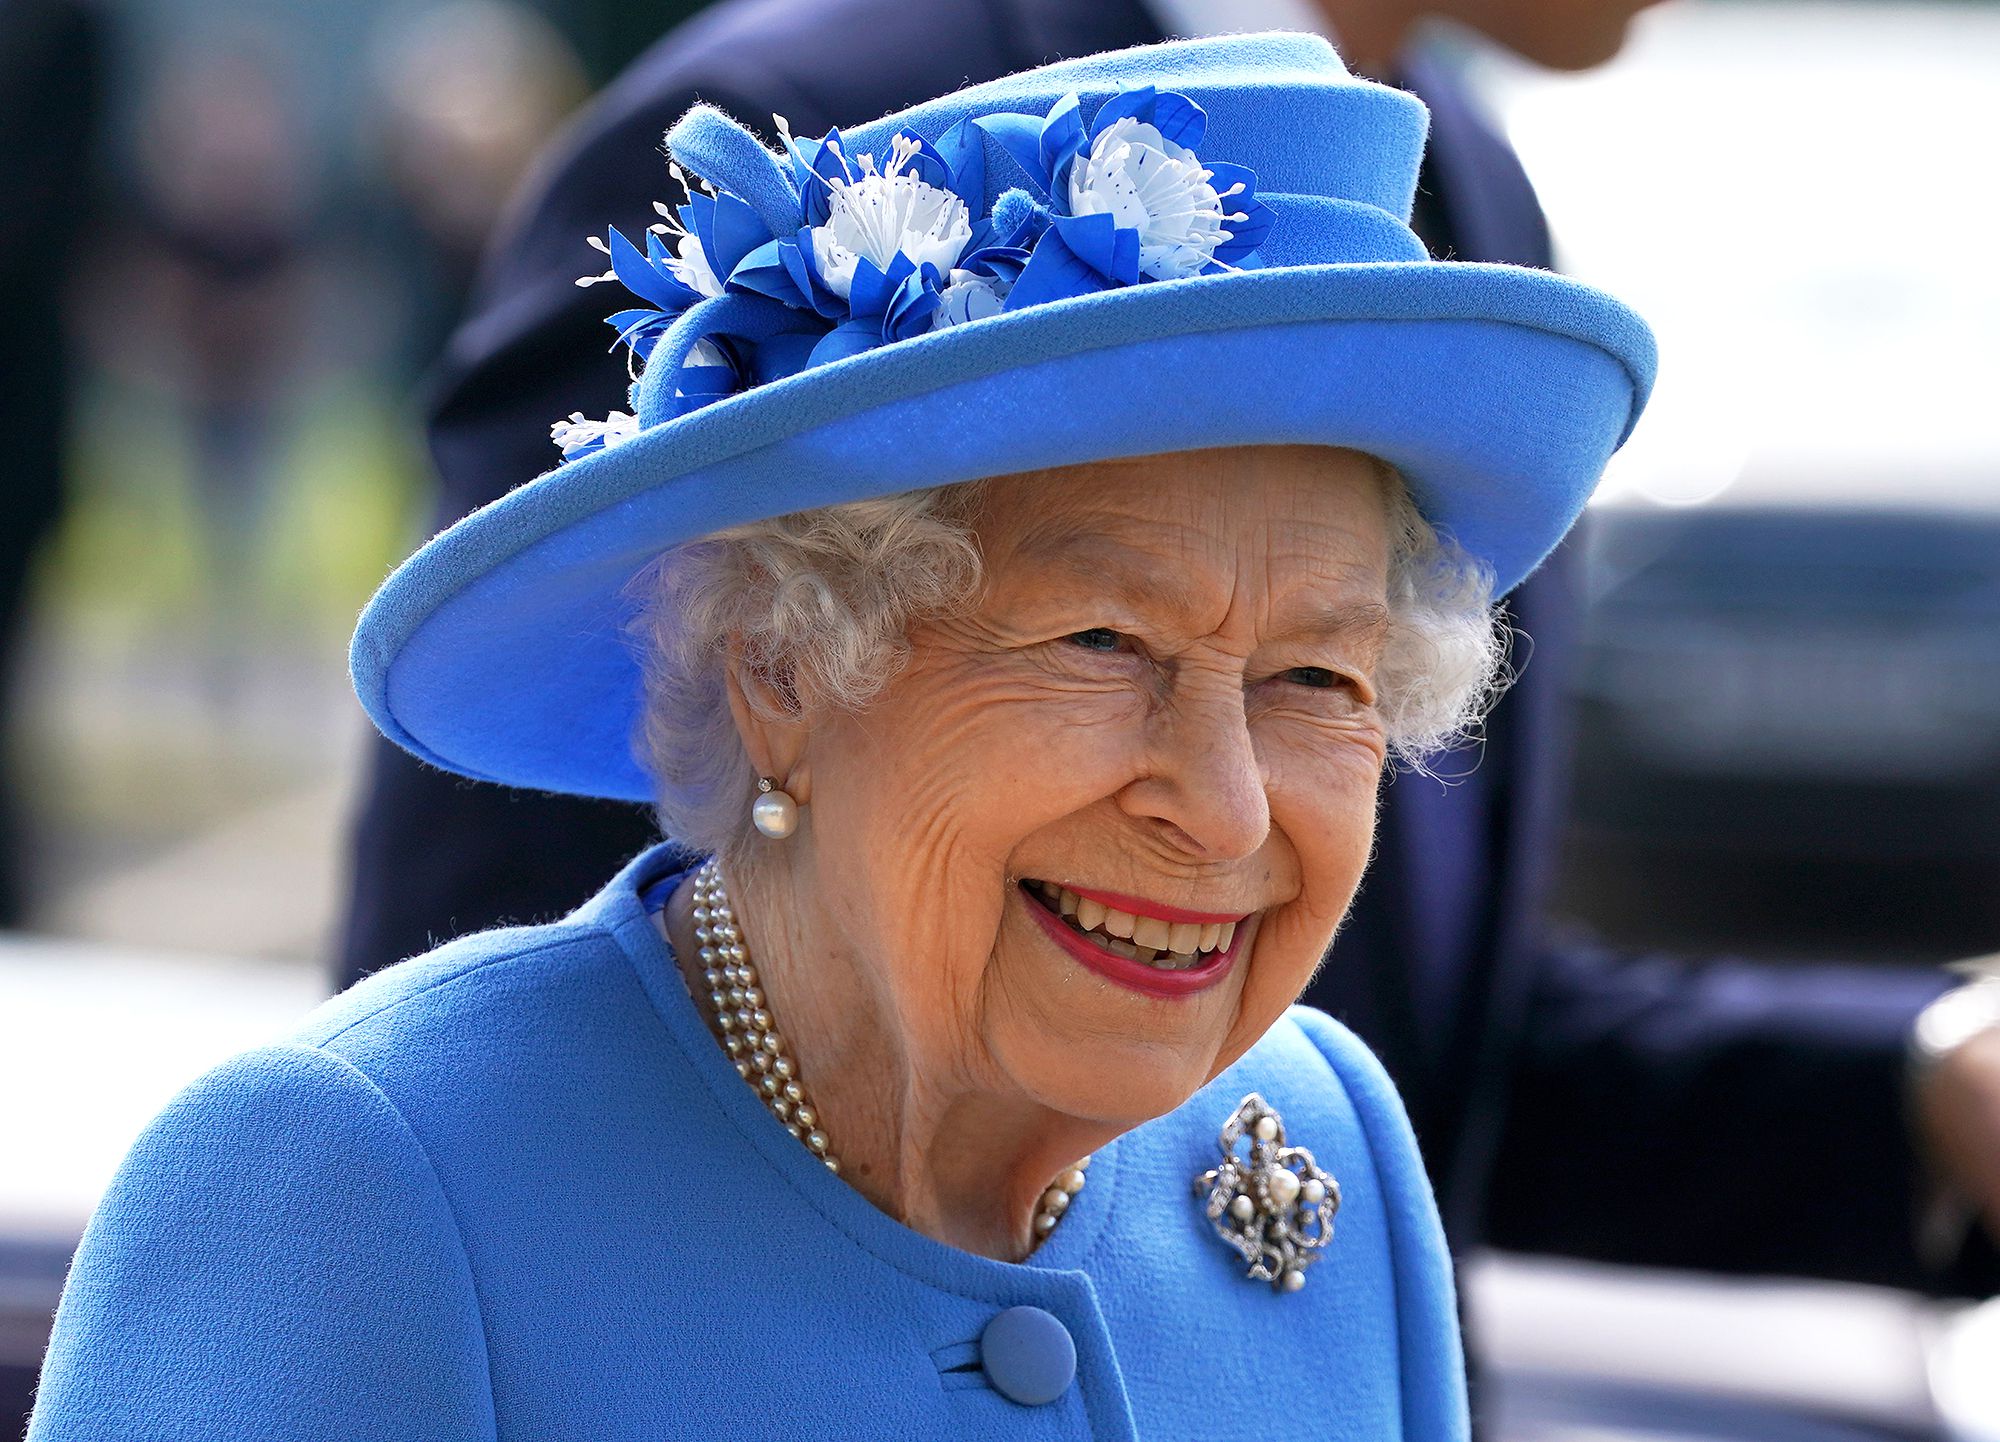 Queen Elizabeth “Kick Bucket” aged 96